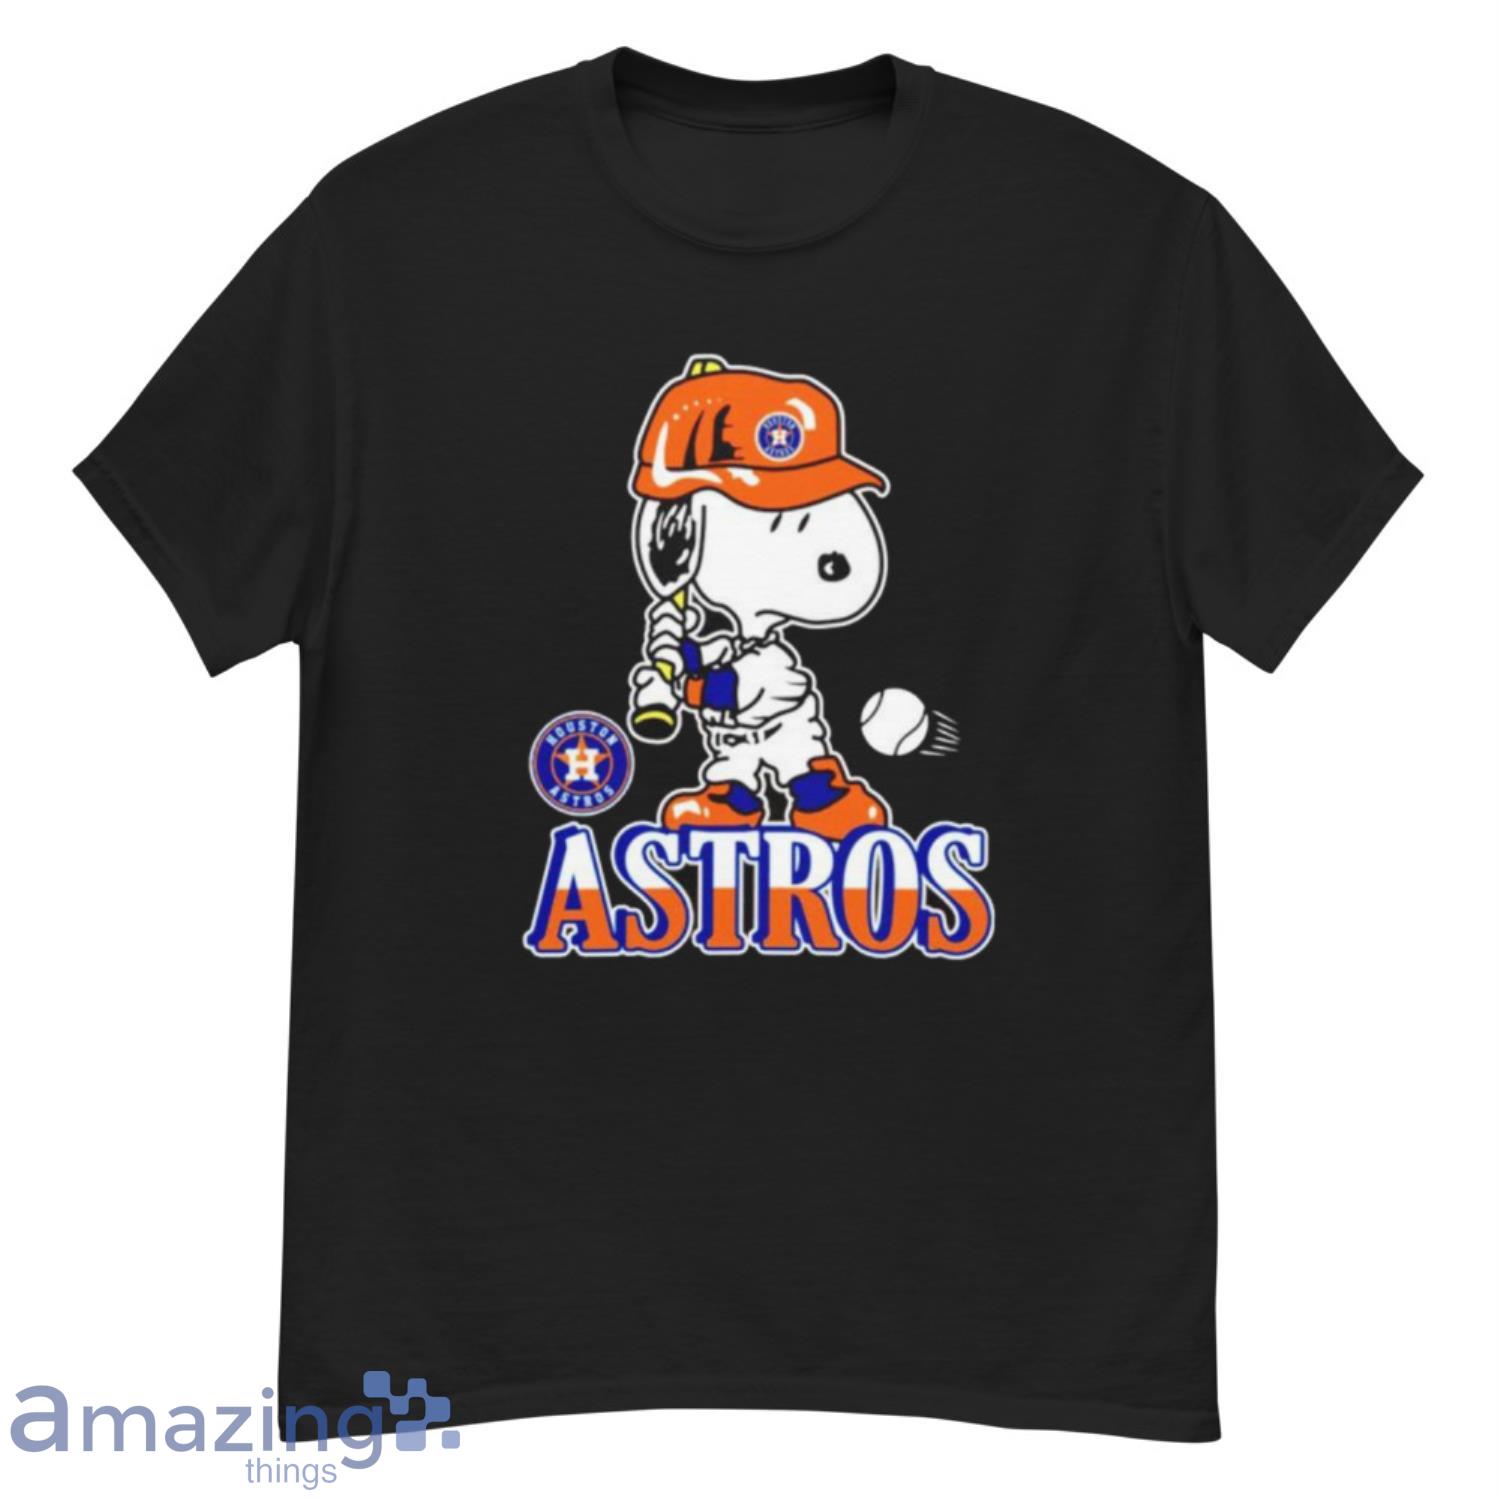 Snoopy Playing Baseball Houston Astros shirt, hoodie, sweater